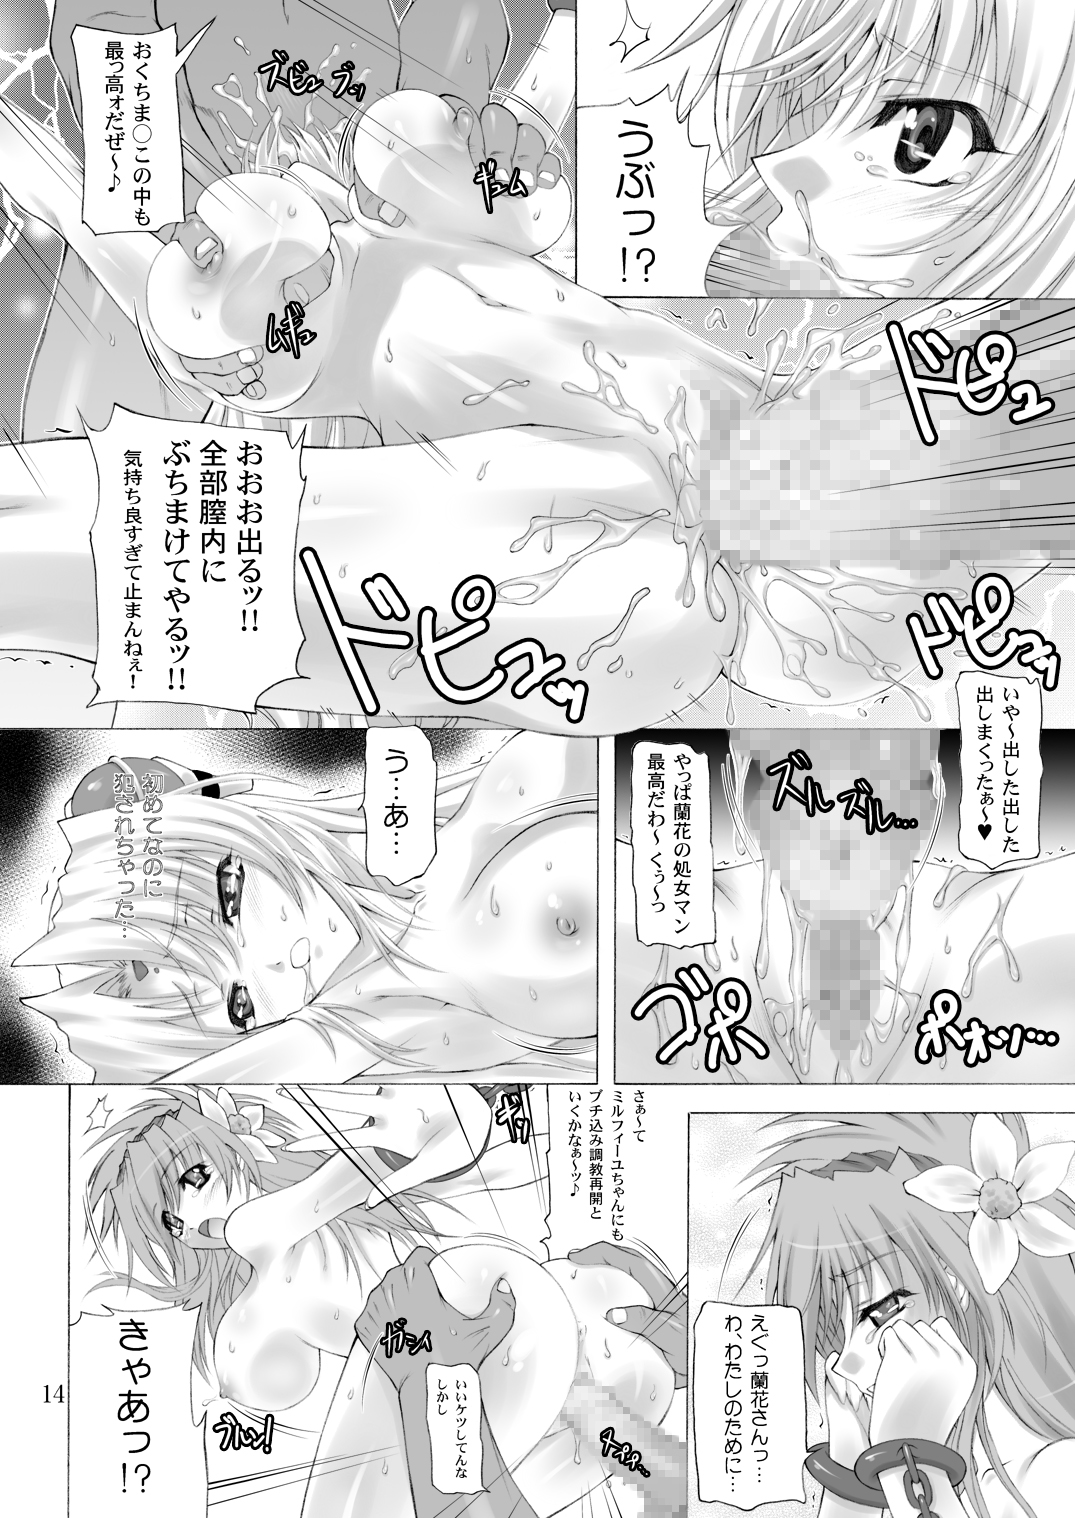 [Hinouhe Family (Ryoukunyo)] Super Rinpha Time! (Galaxy Angel) [Digital] [ひのうへファミリー (りょうくんよ)] スーパーリンファタイム！ (ギャラクシー☆エンジェル) [DL版]